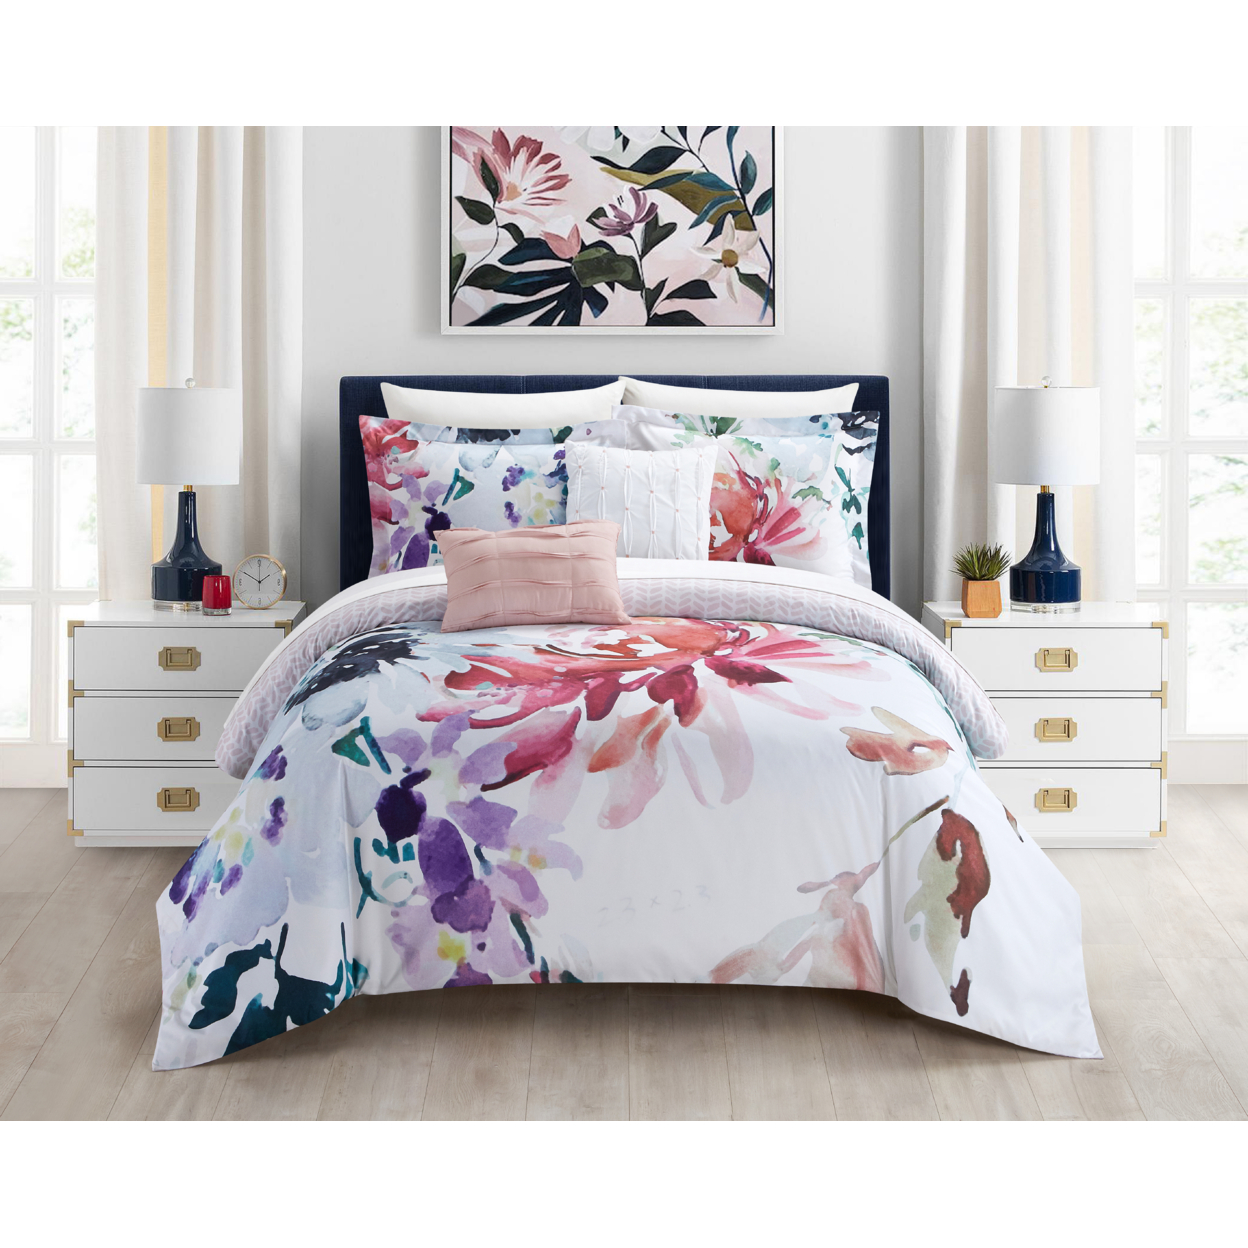 Victoria 5 Piece Reversible Comforter Set Floral Watercolor Design Bedding - Victoria Purple, Queen